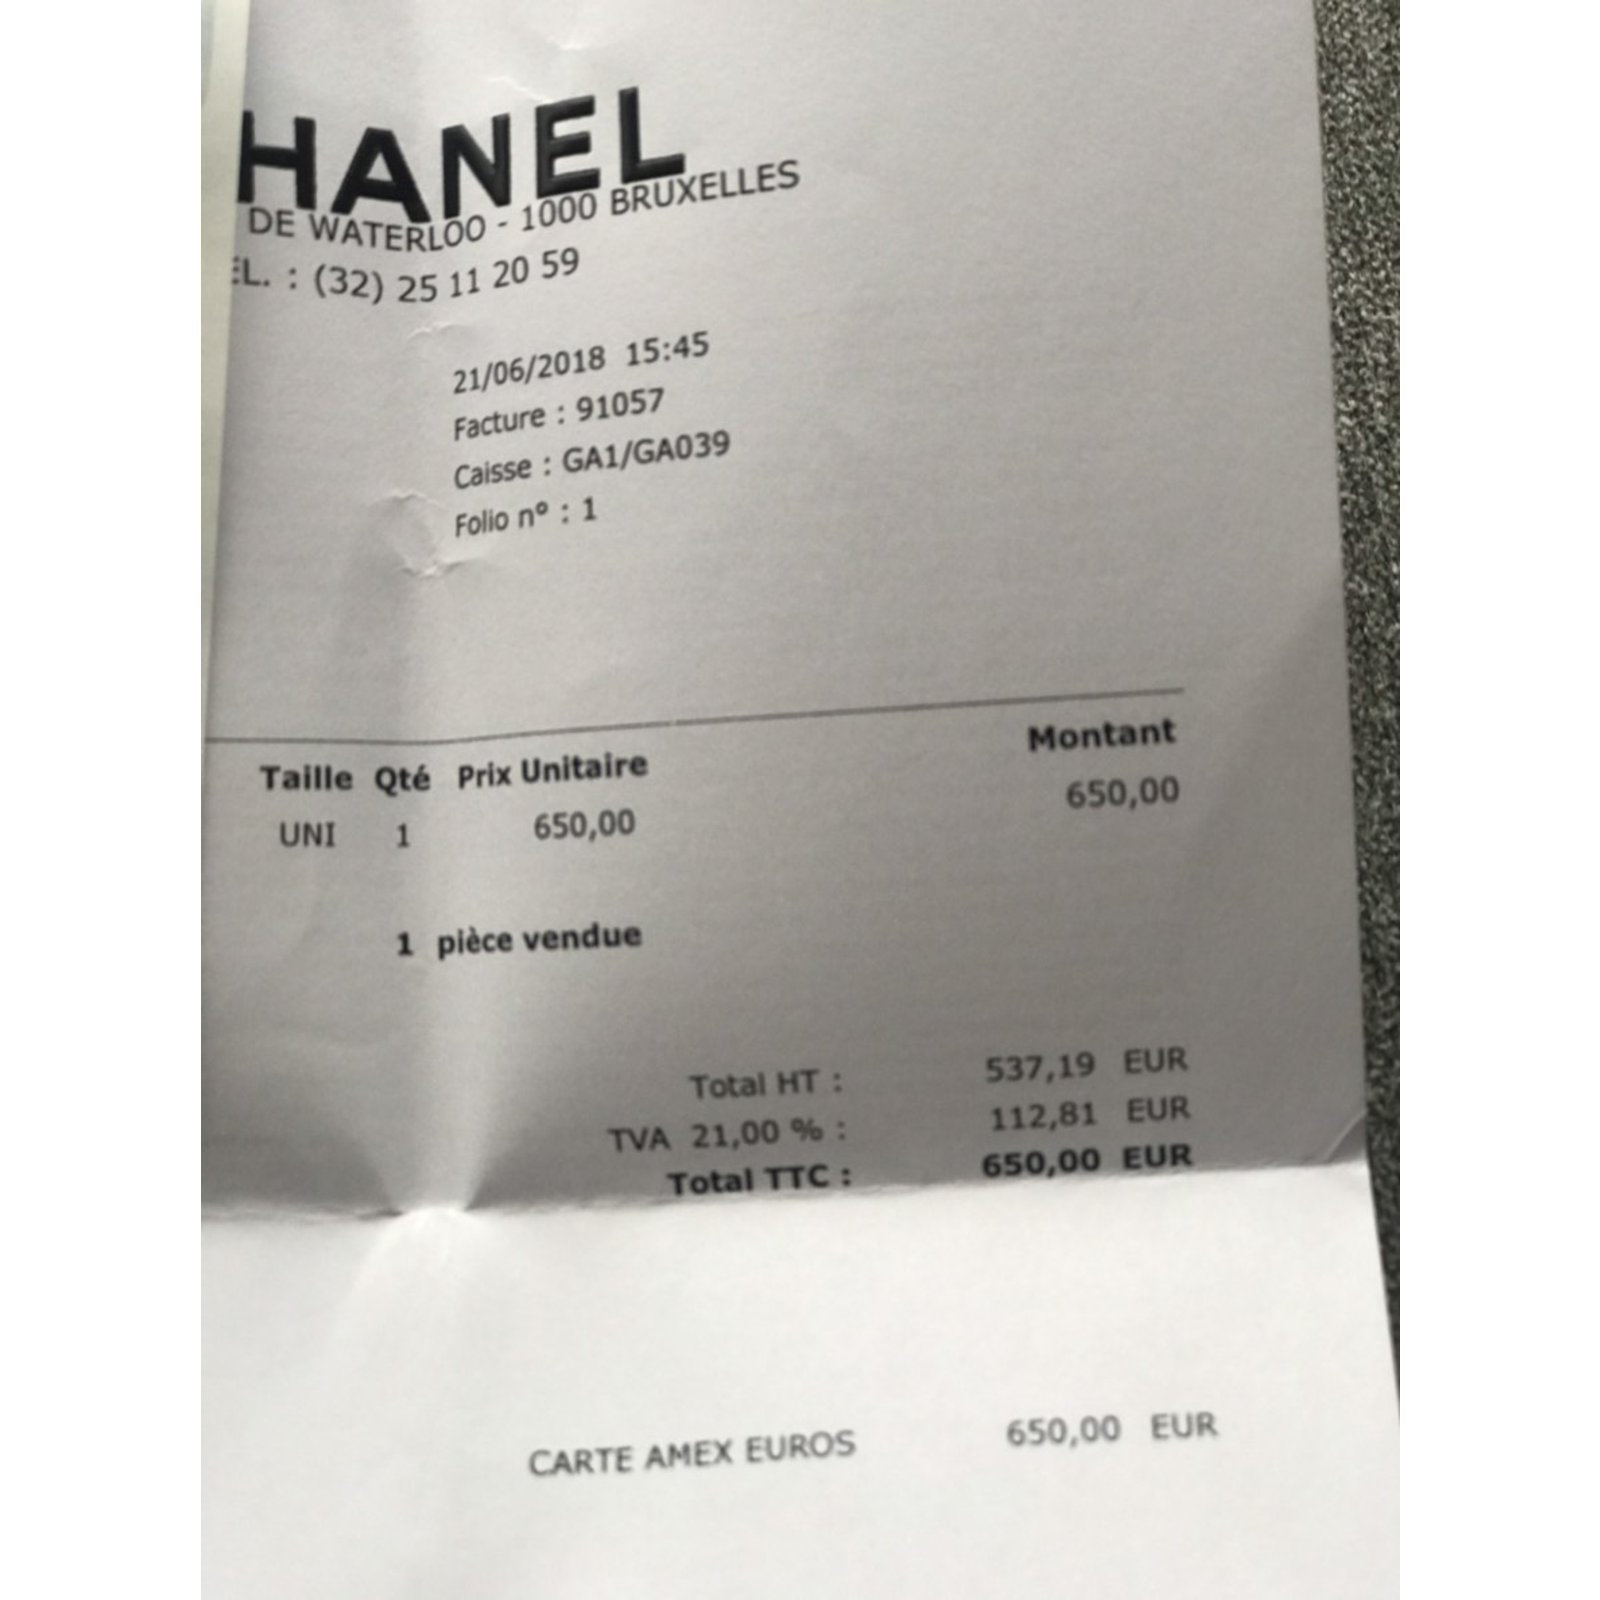 Chanel Receipt – expenseFAST